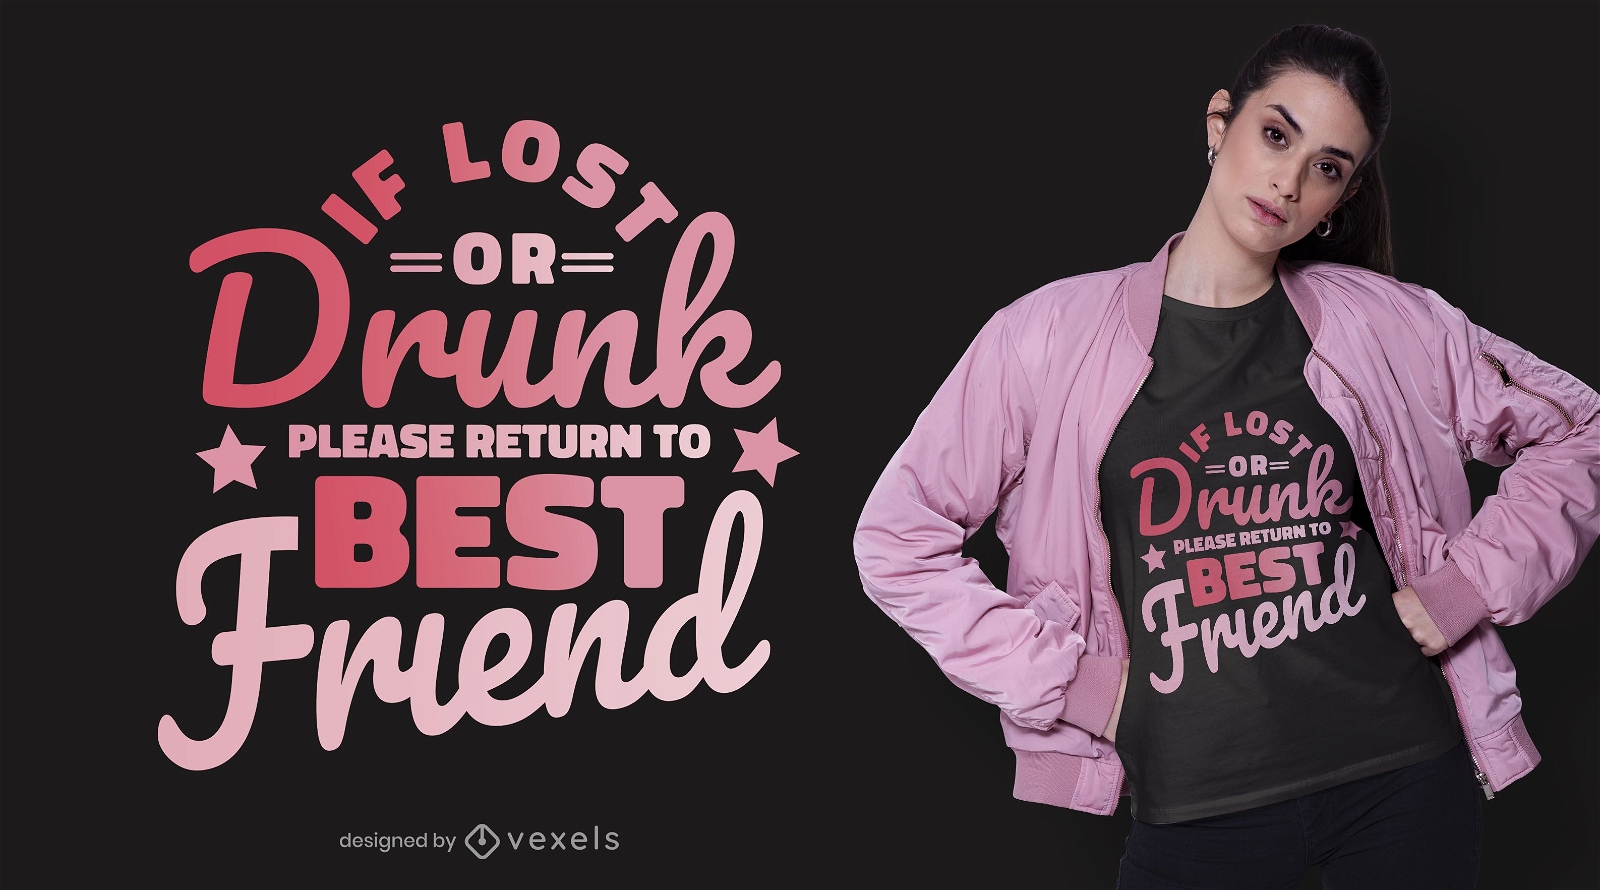 Verlorene oder betrunkene T-Shirt Design